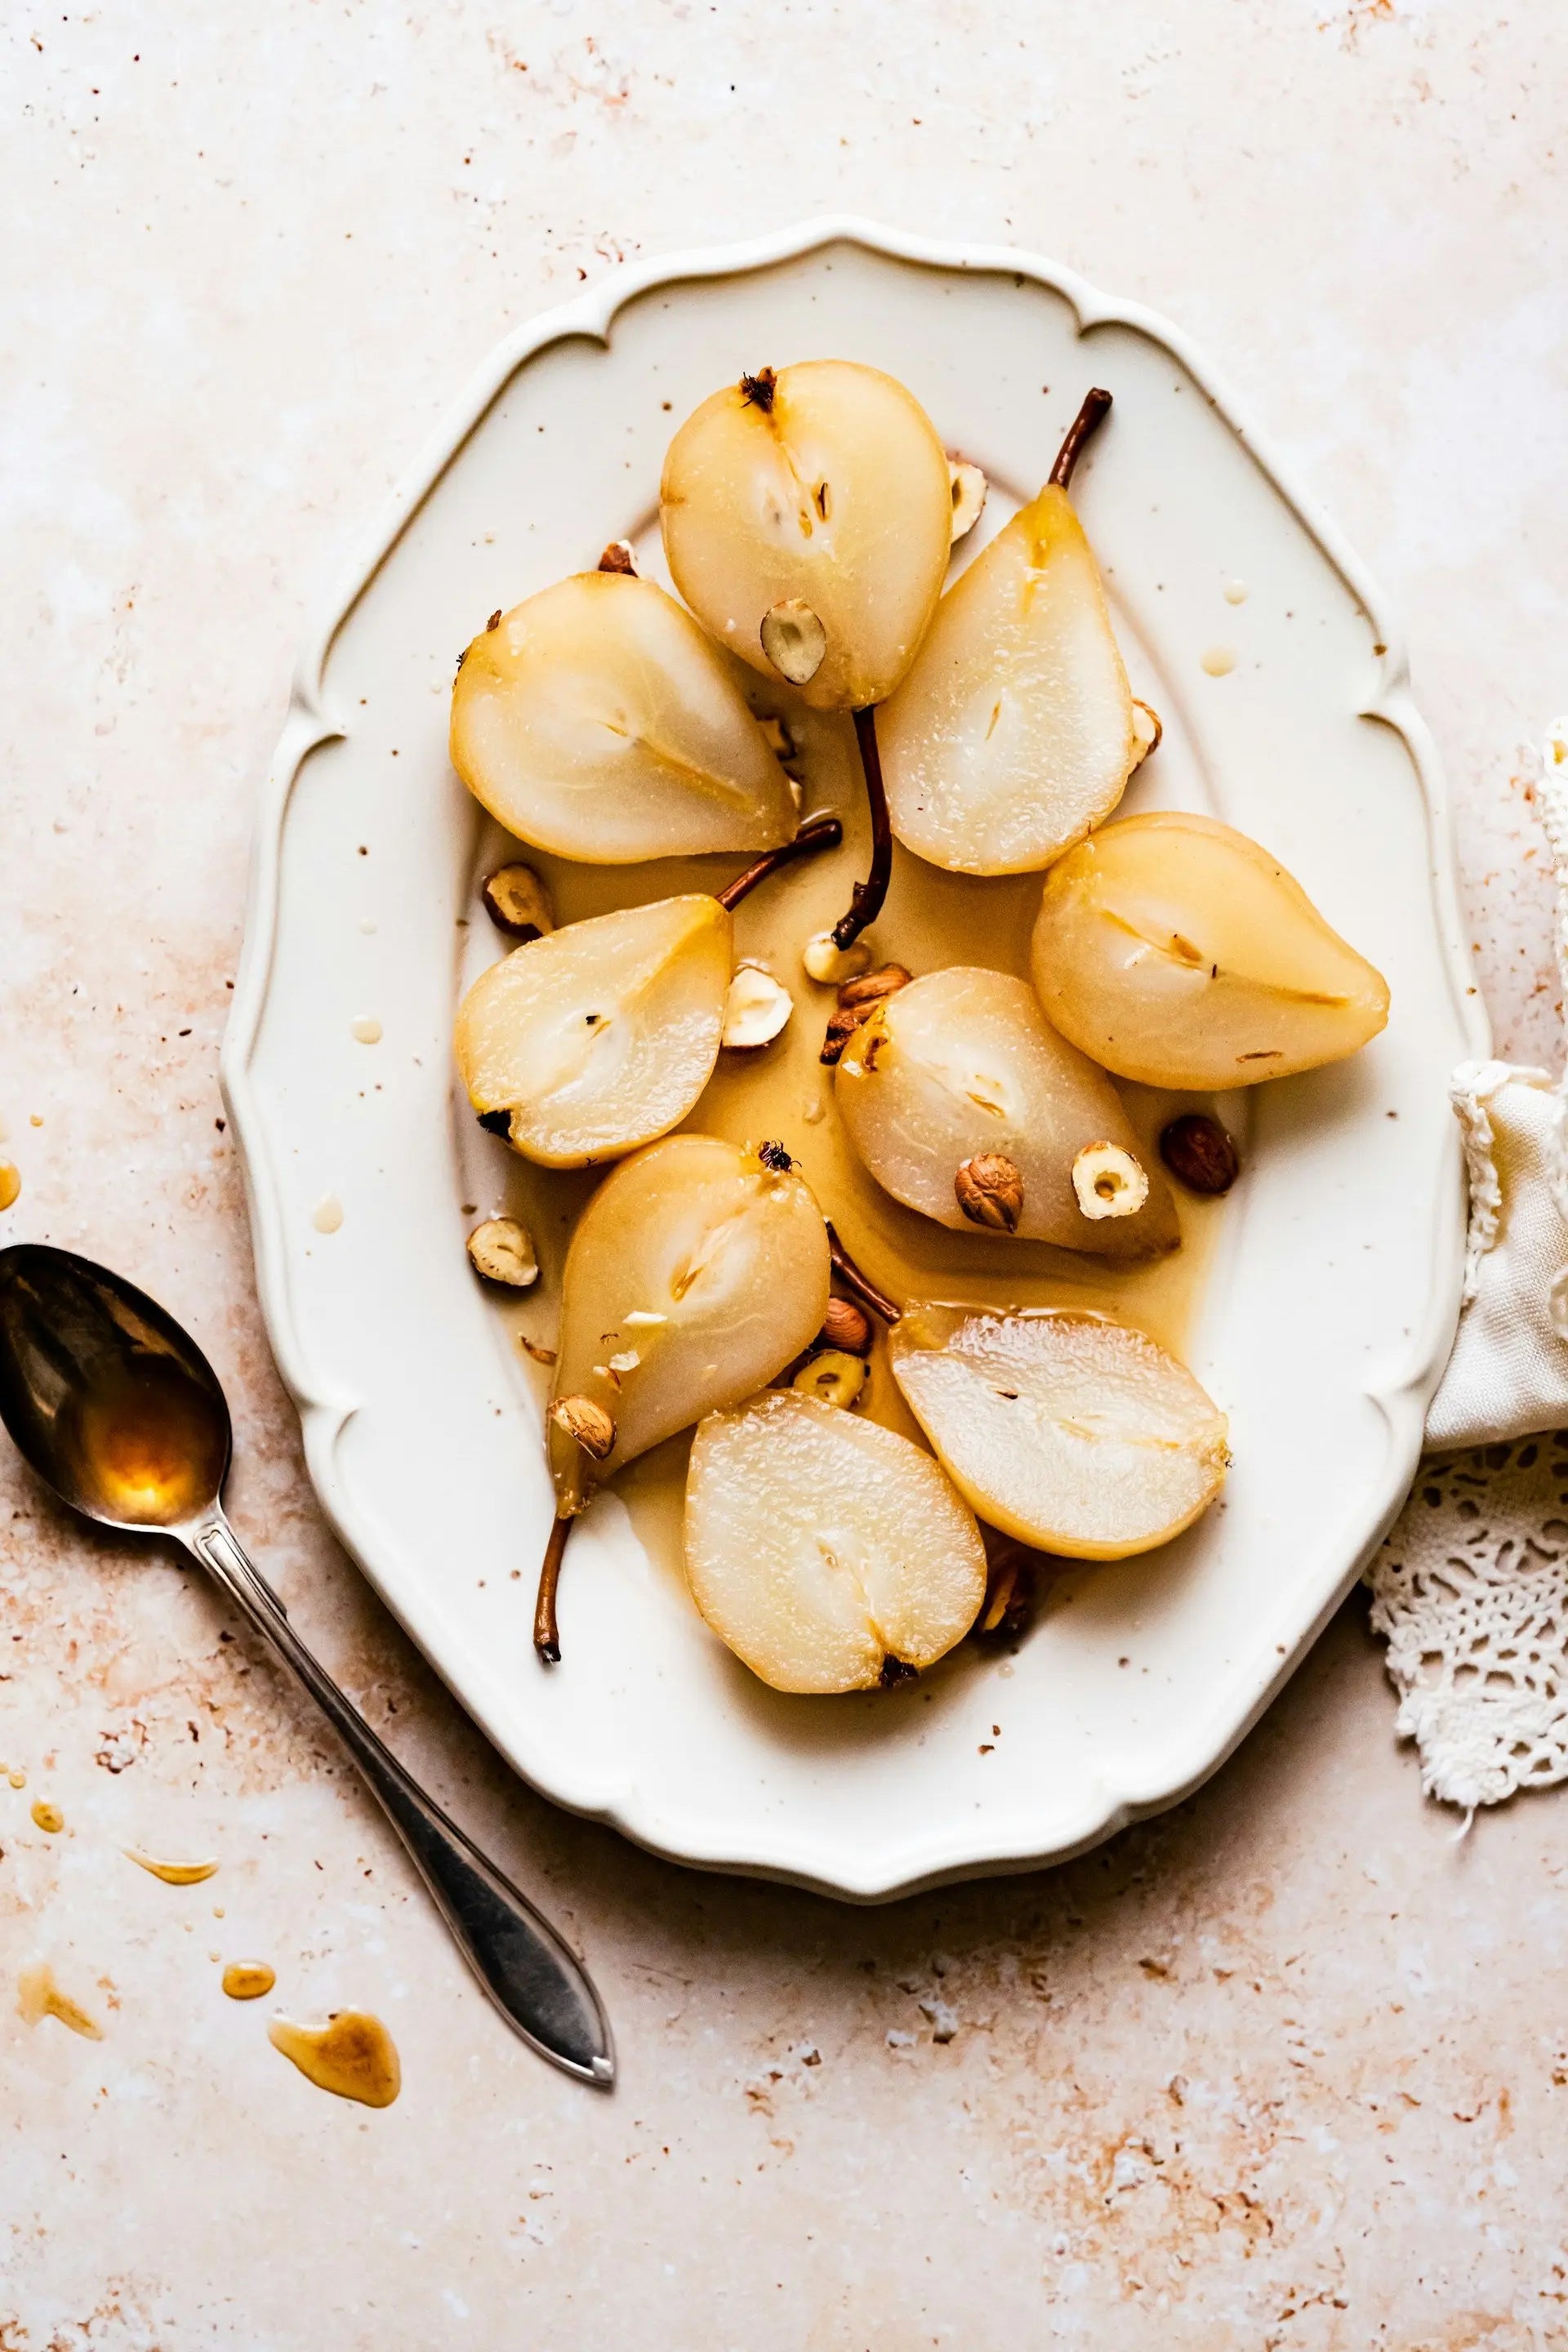 How-Long-Do-Canned-Pears-Last-In-The-Fridge | Fridge.com